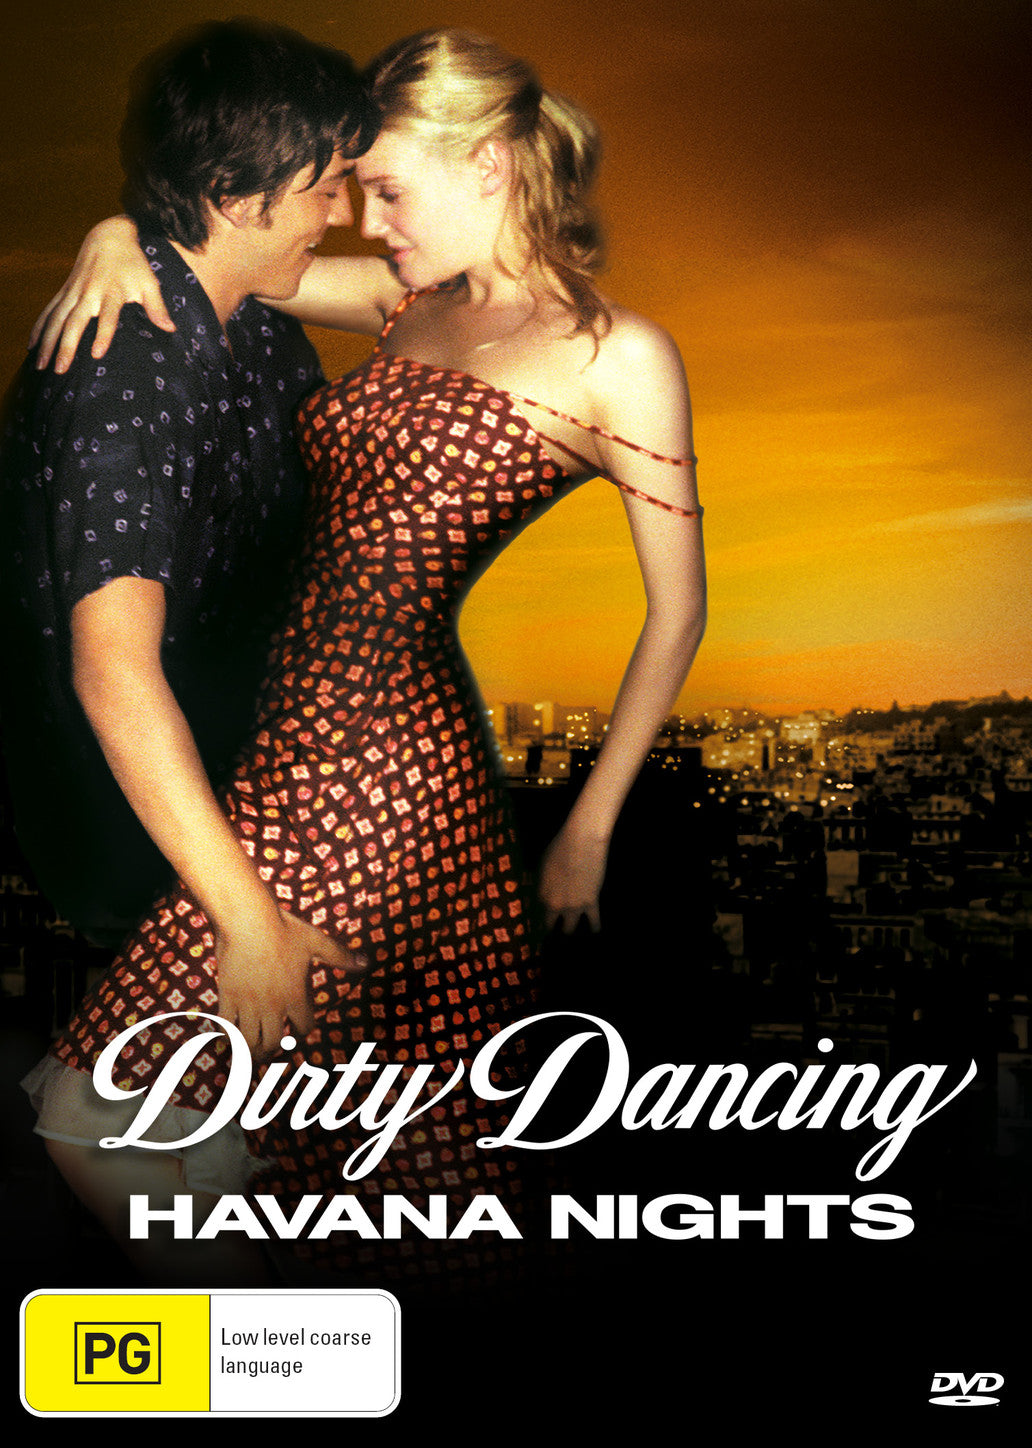 DIRTY DANCING: HAVANA NIGHTS